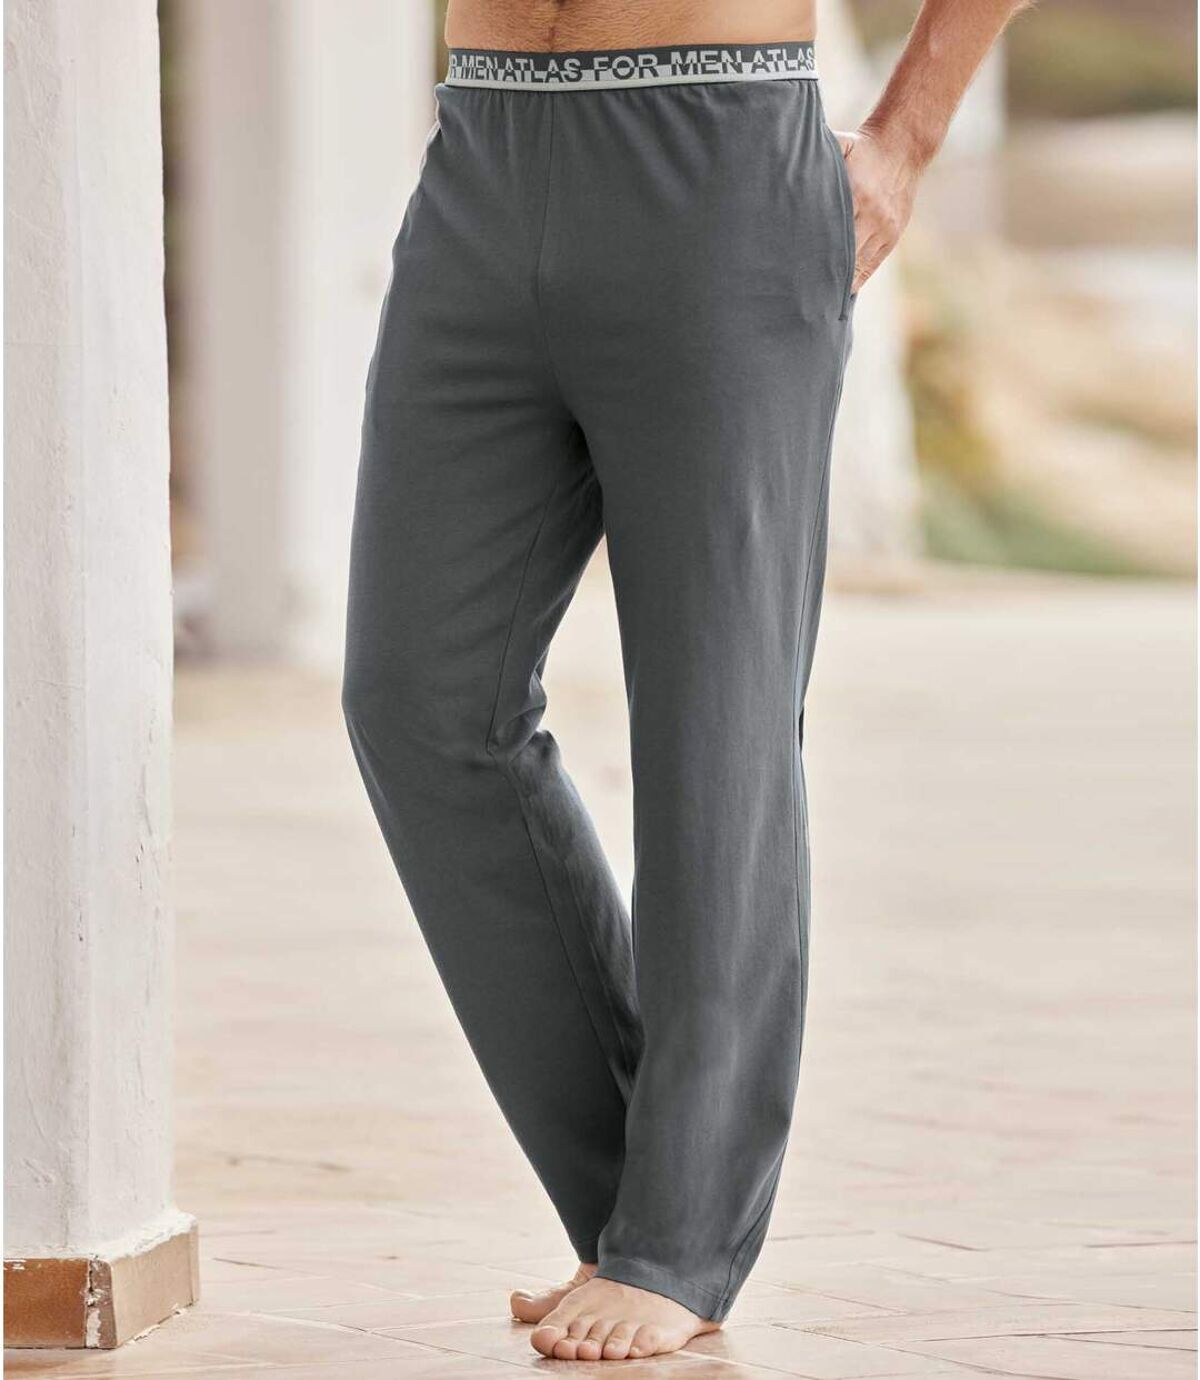 Men's Gray Lounge Pants Atlas For Men